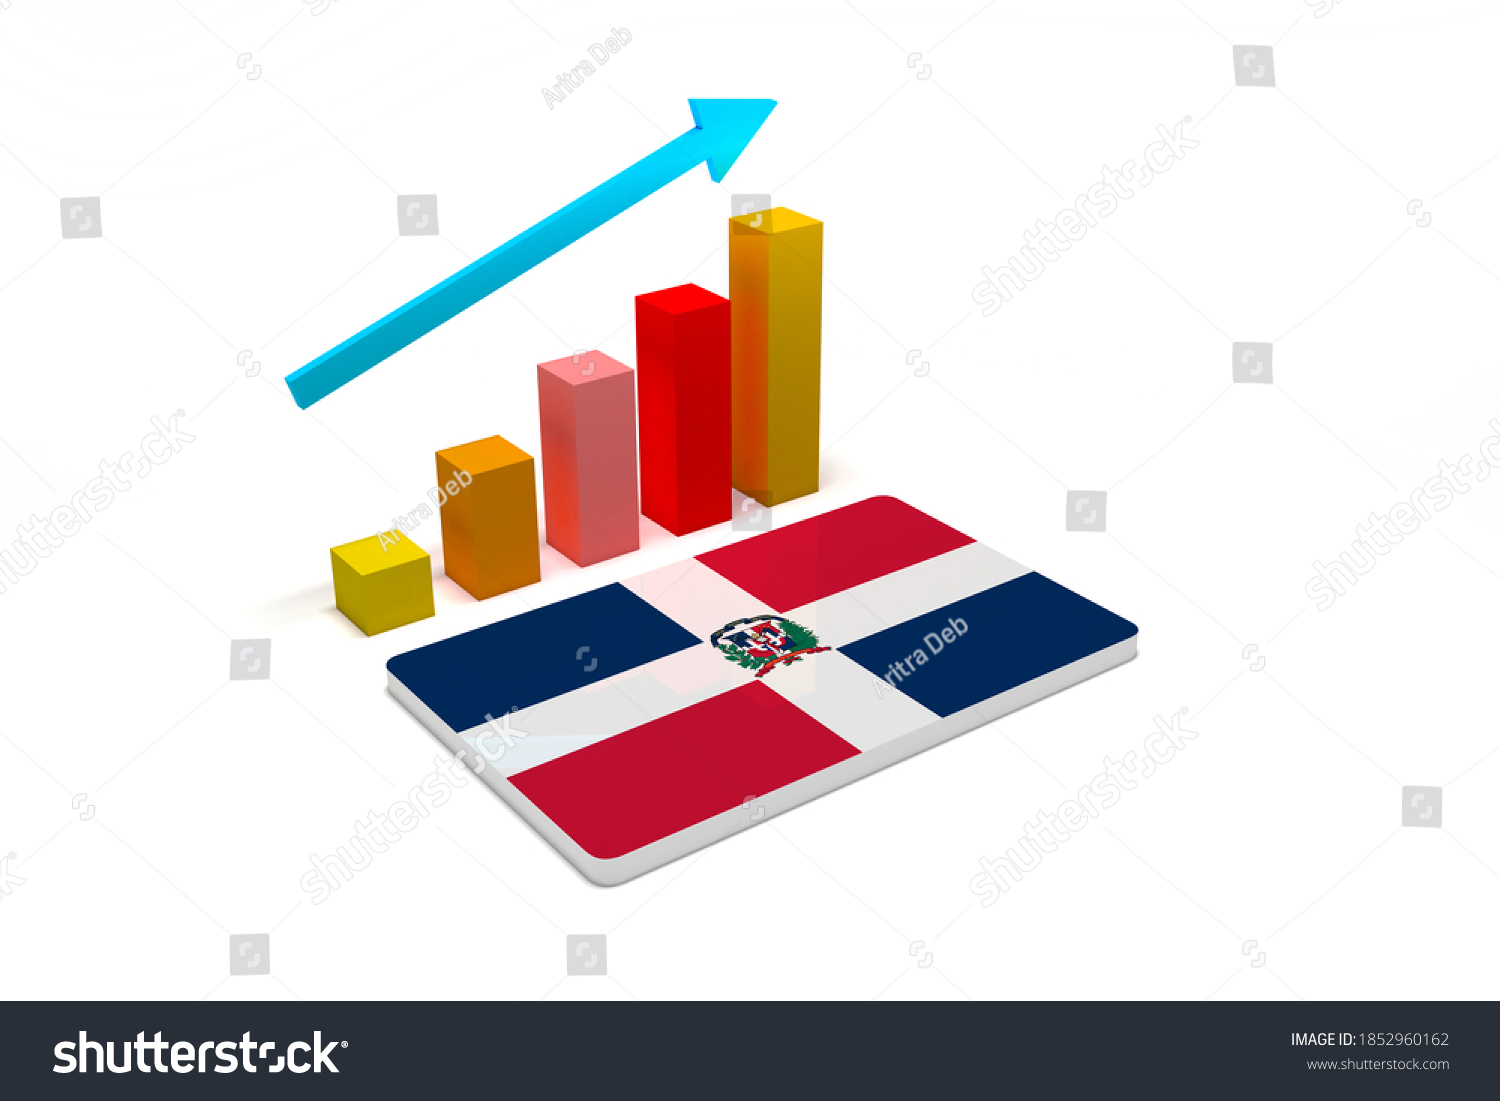 Gdp Dominican Republic Financial Economy Financial Stock Illustration